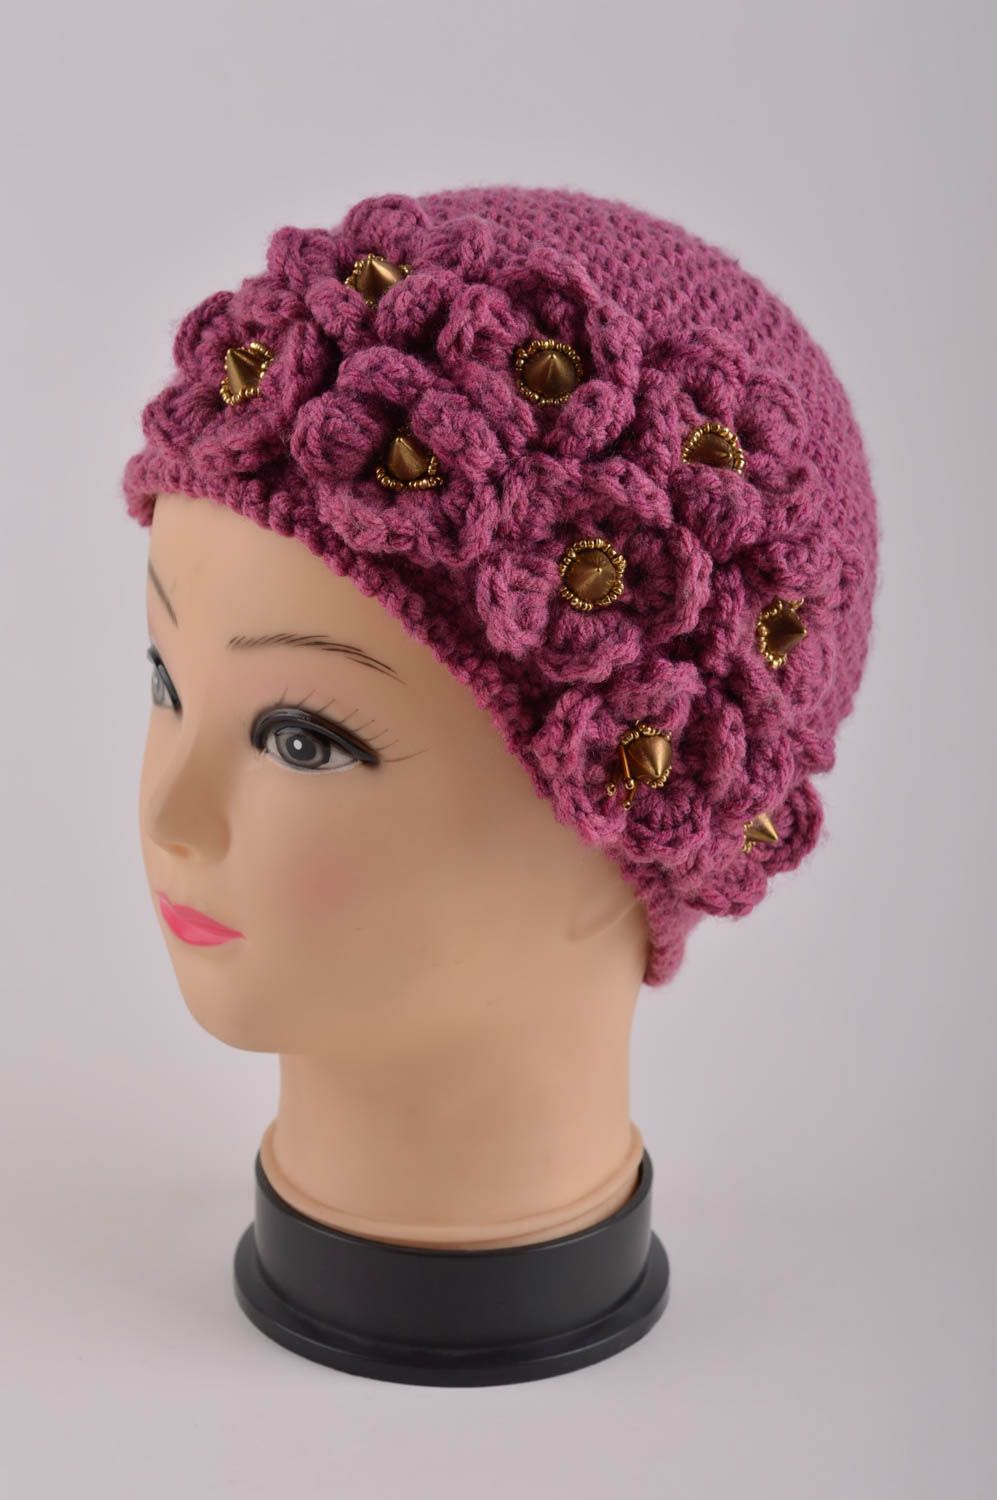 Handmade ladies hat designer accessories winter hats for women gifts for girls photo 2